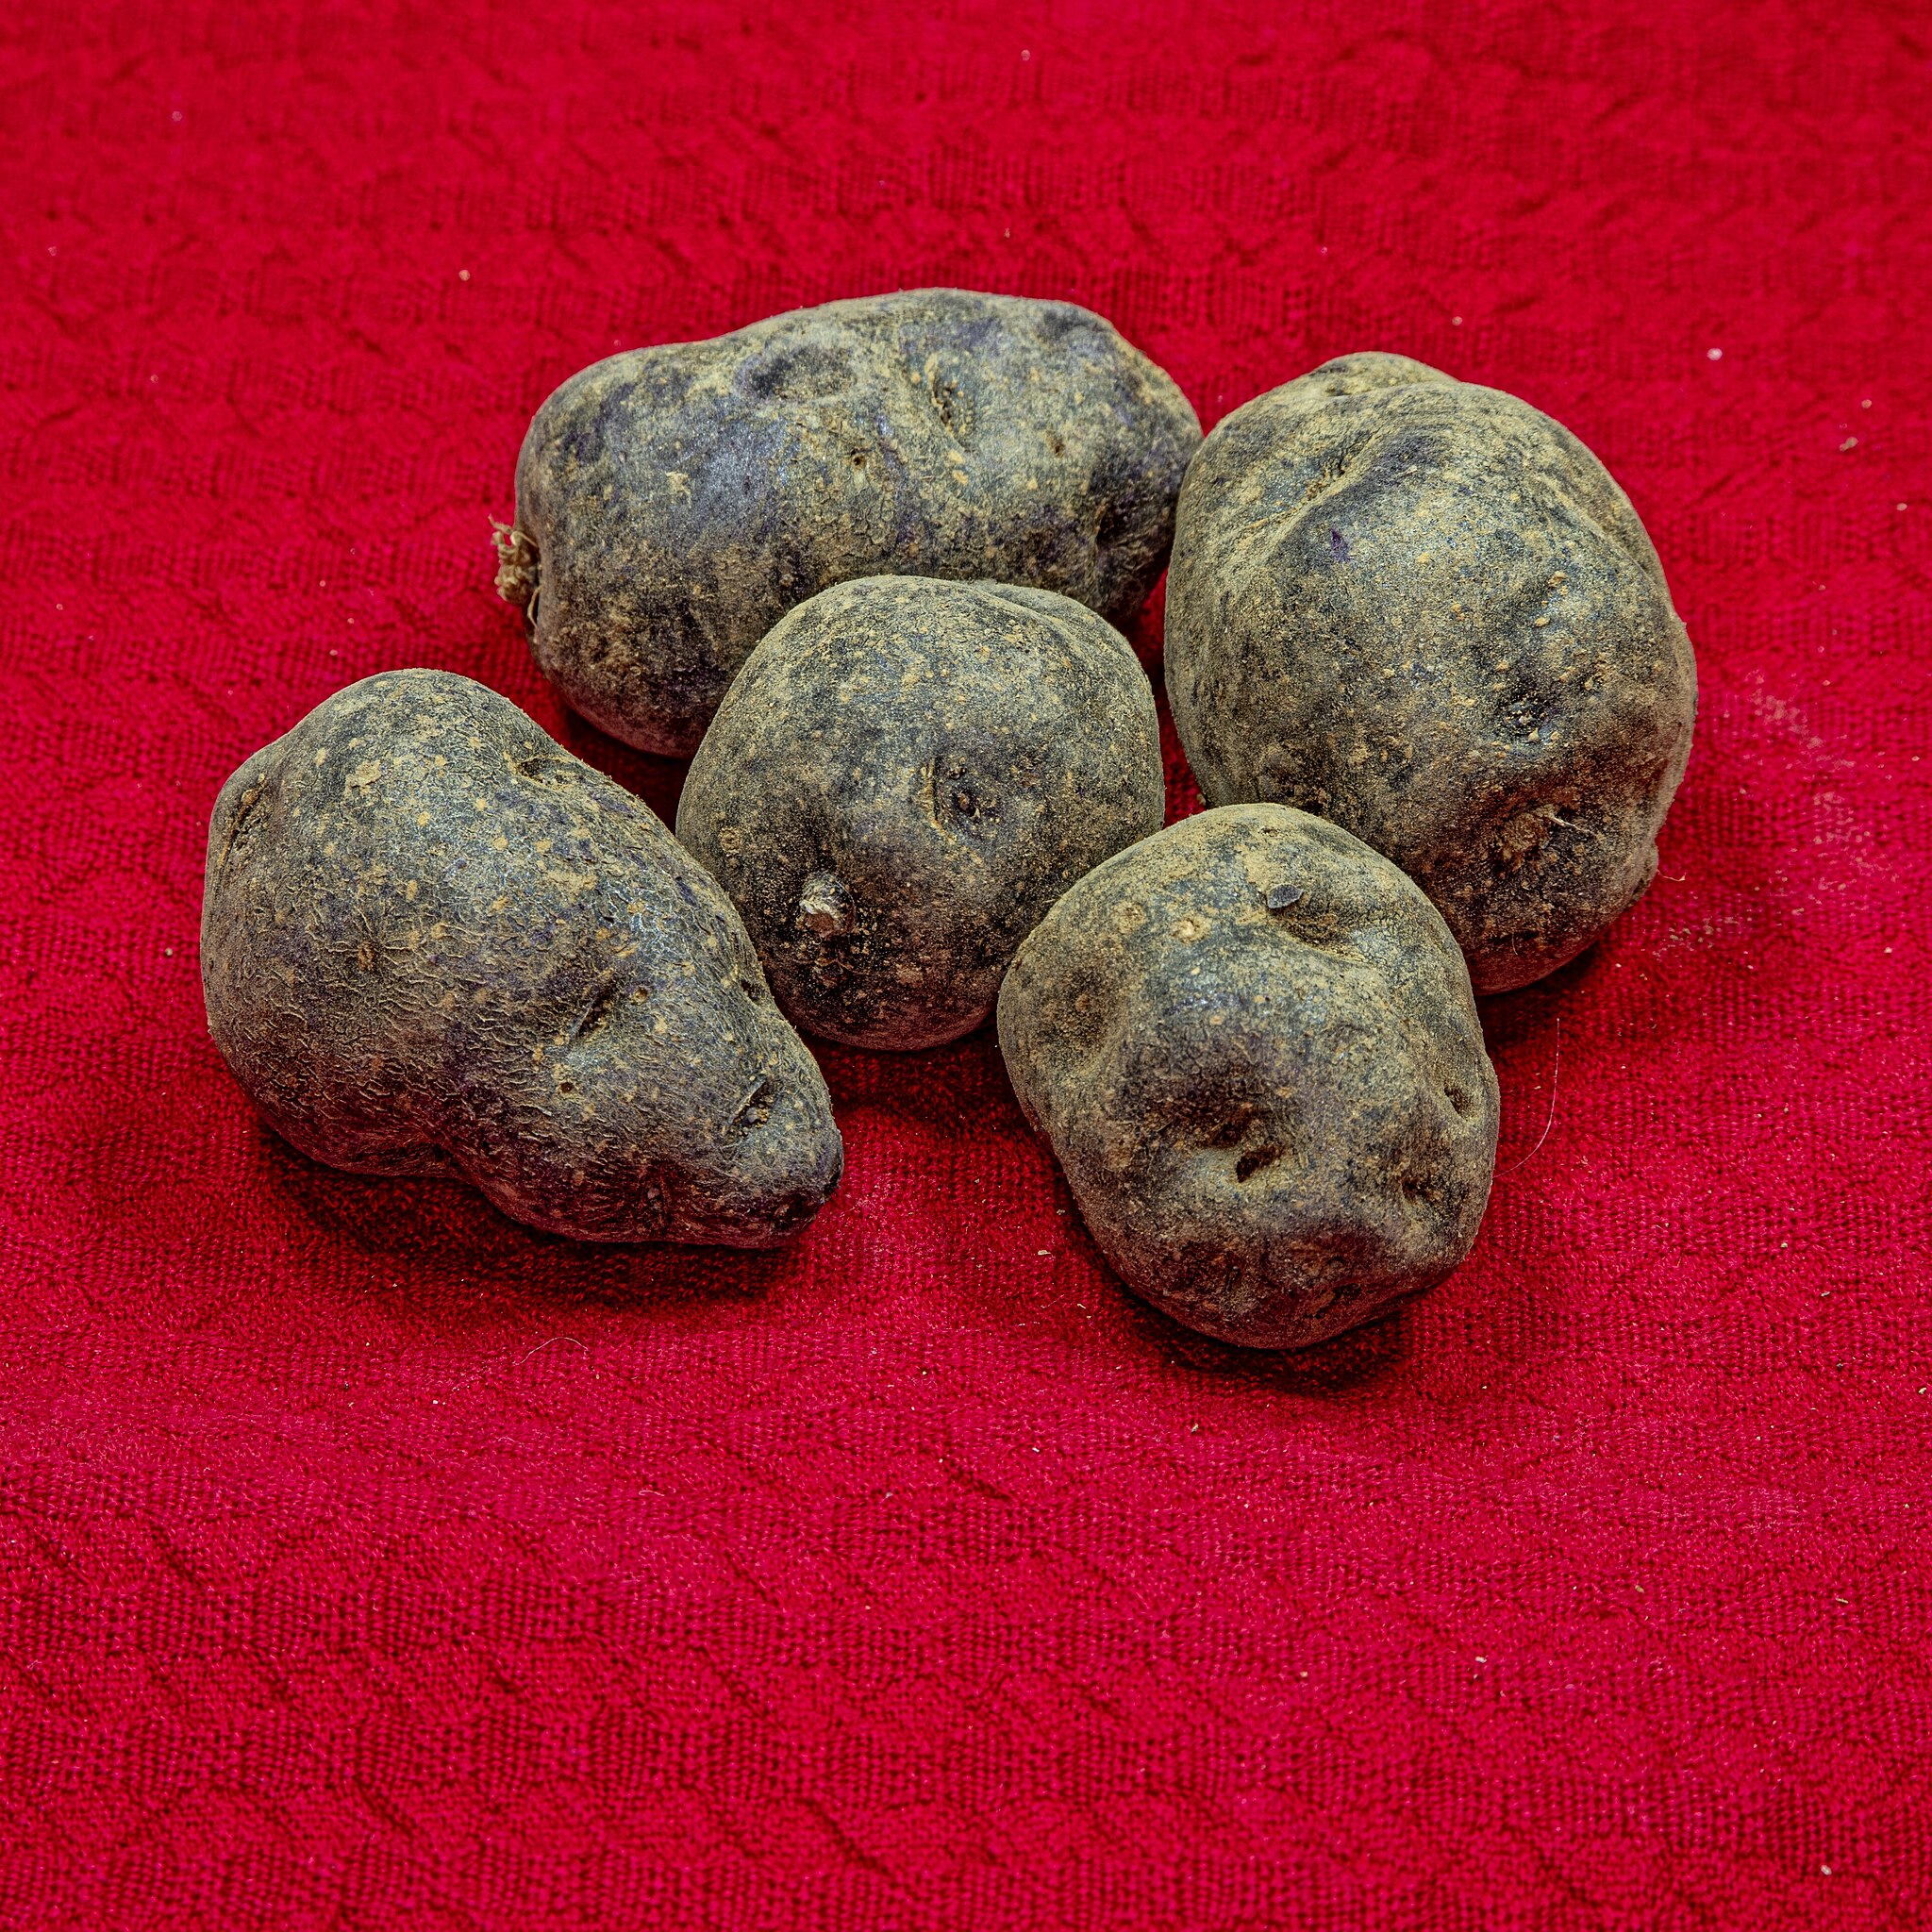 File:Vitelotte (potatoe) jm154671.jpg - Wikimedia Commons